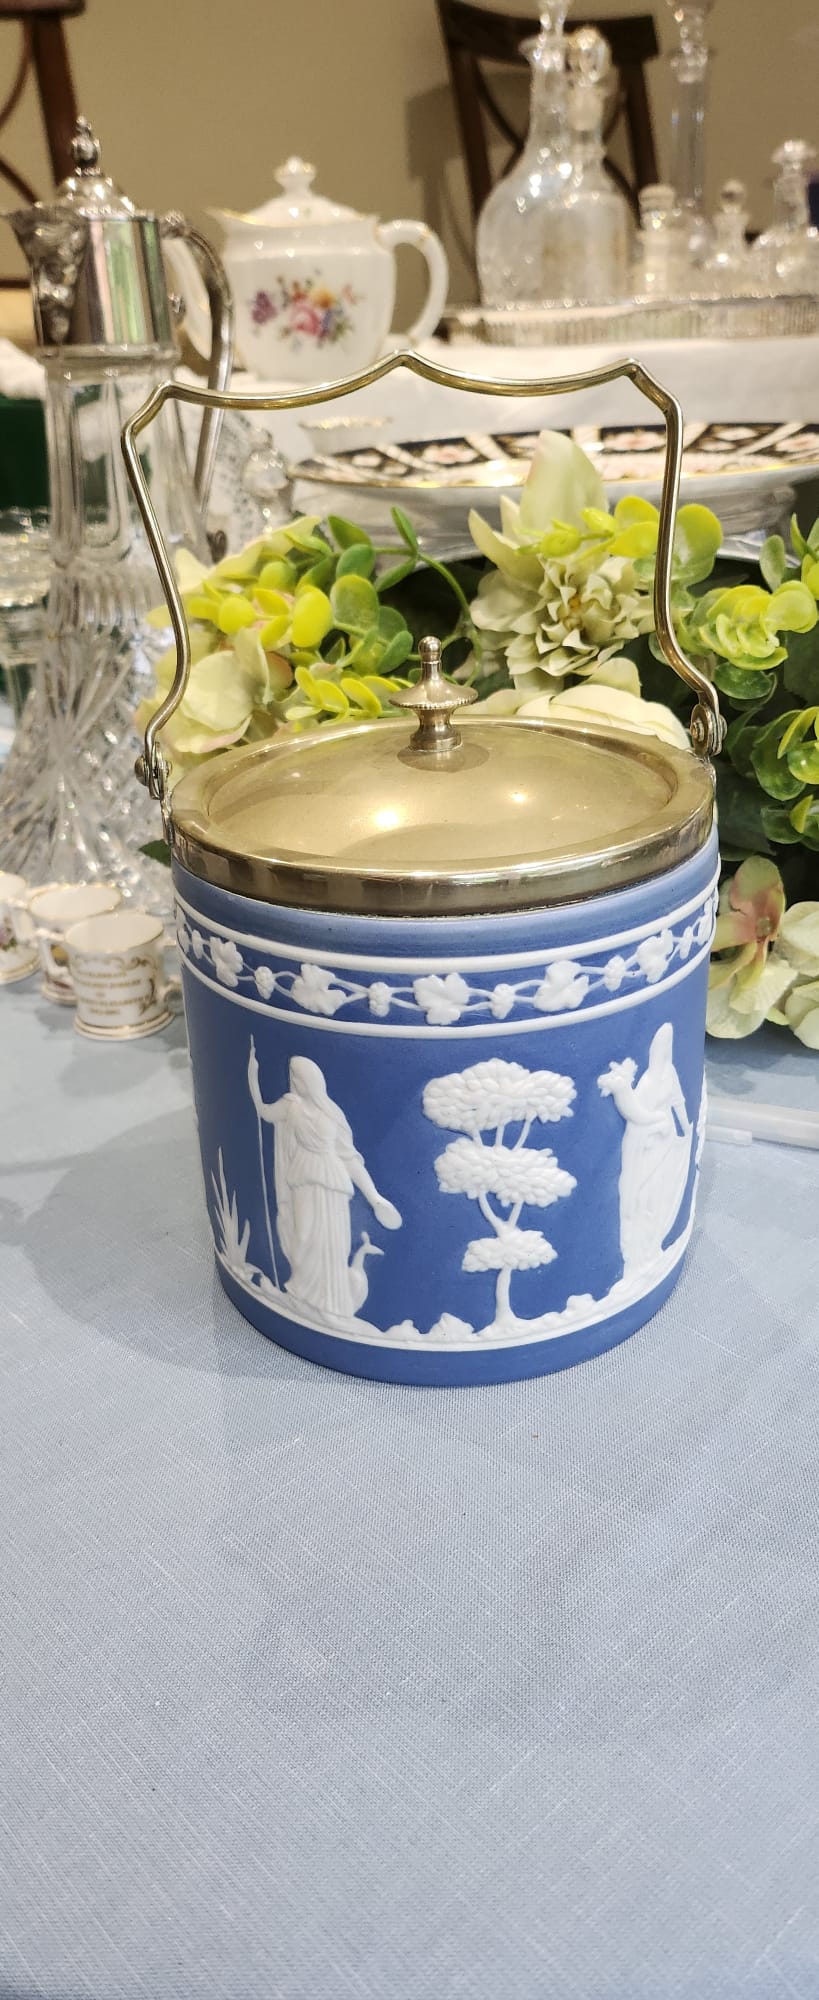 Vintage blue and white biscuit barrel